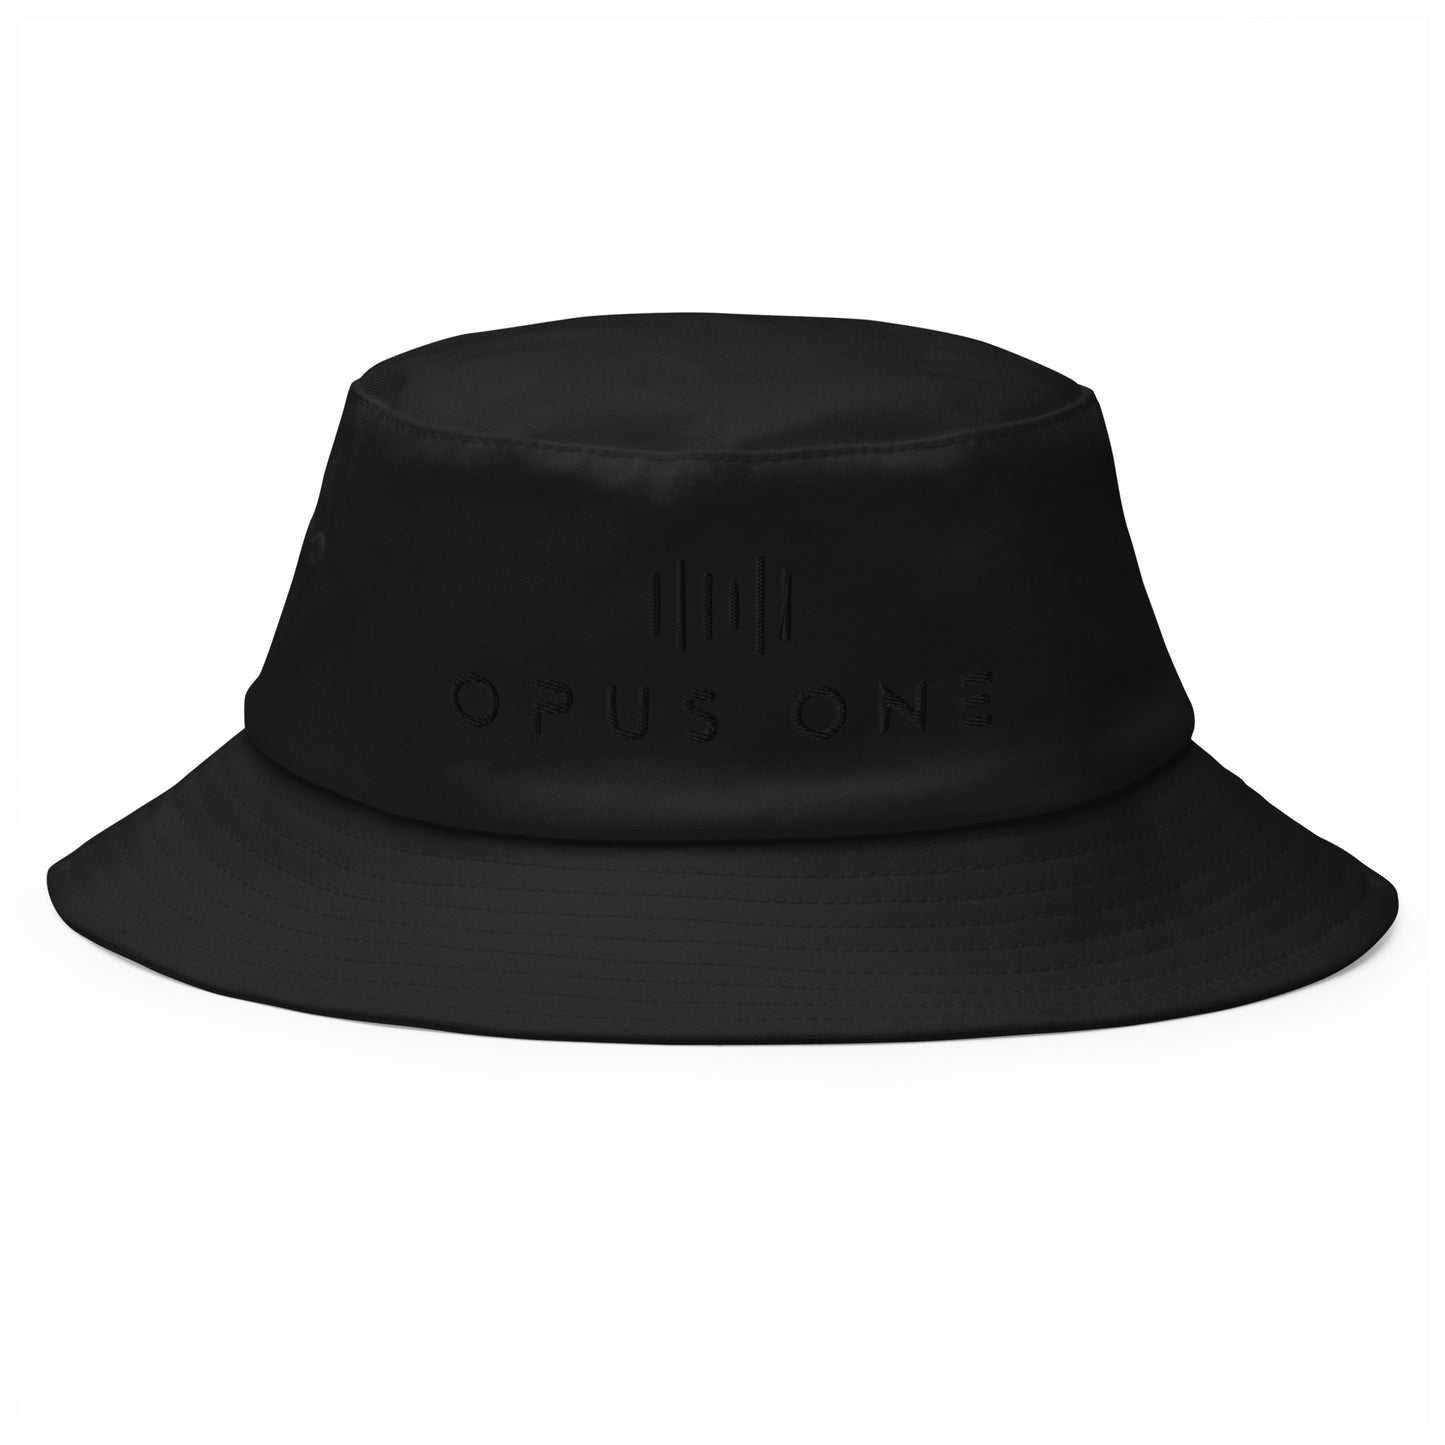 Opus One (Black) Old School Bucket Hat